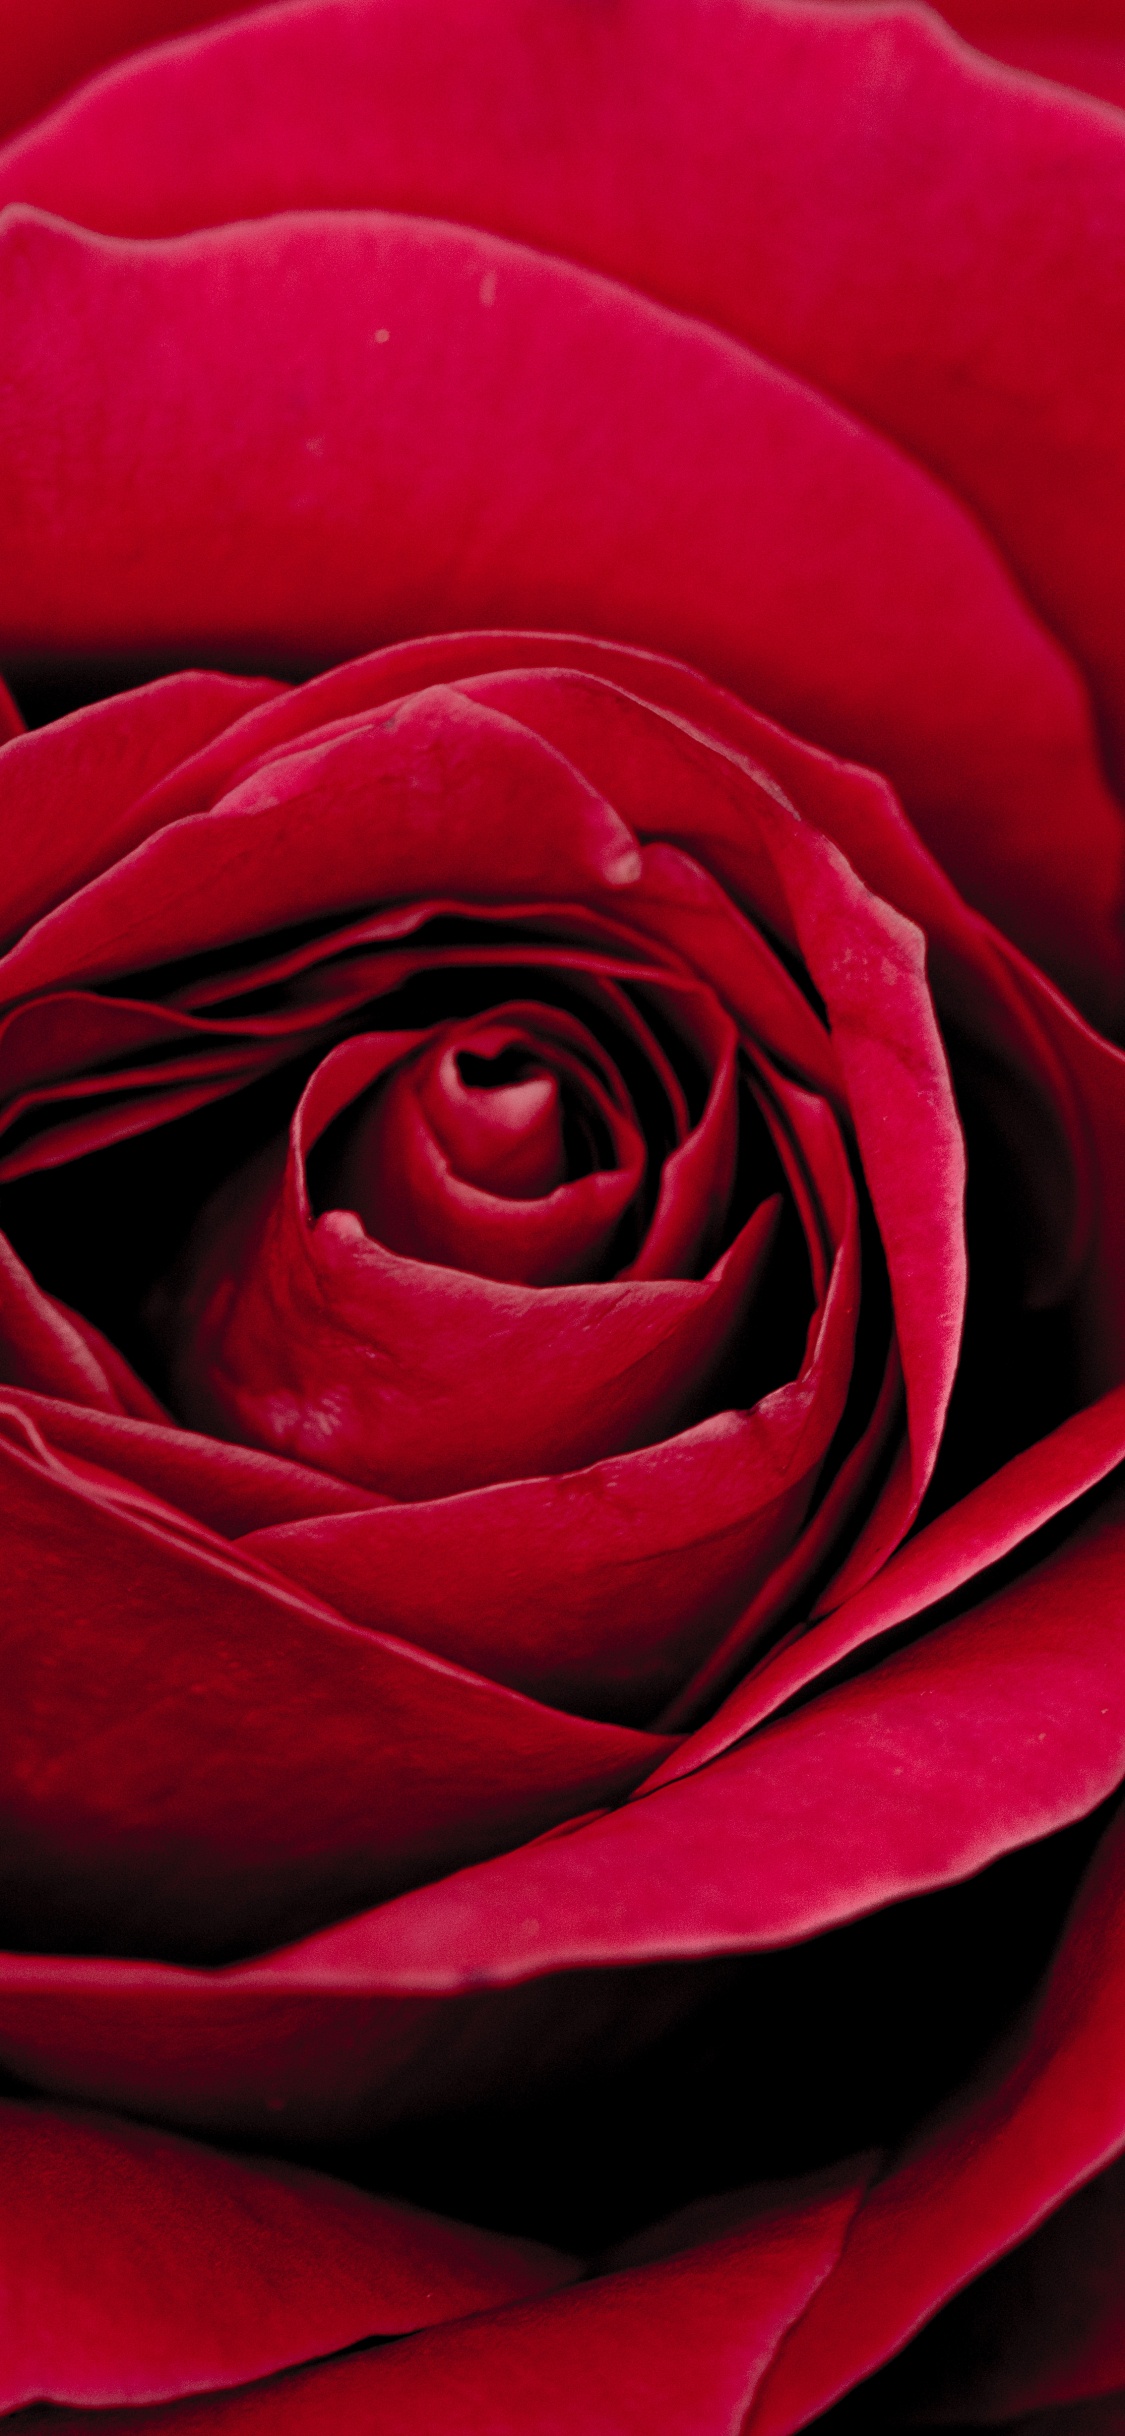 Rose Rouge en Fleur Photo en Gros Plan. Wallpaper in 1125x2436 Resolution